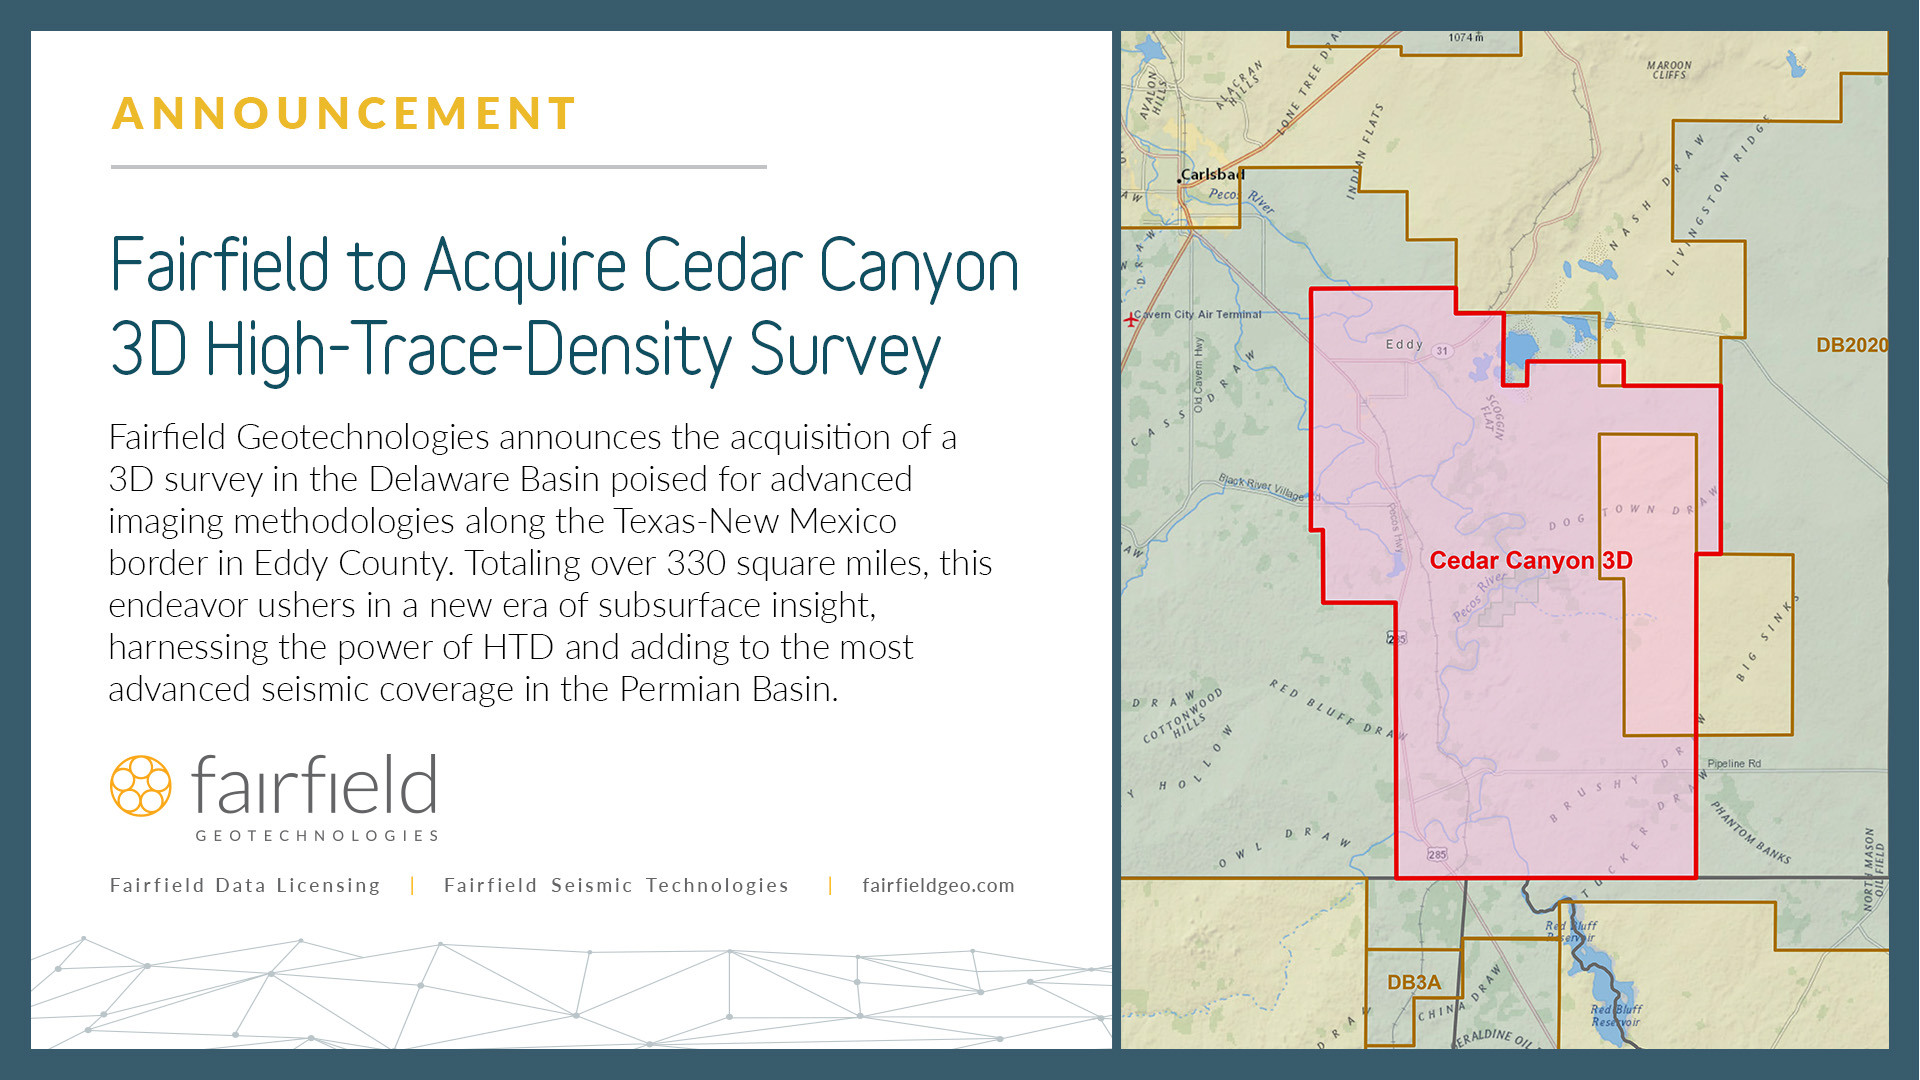 Revolutionizing Advancements in 3D Seismic Collection, Fairfield Geotechnologies Announces Cedar Canyon 3D Survey